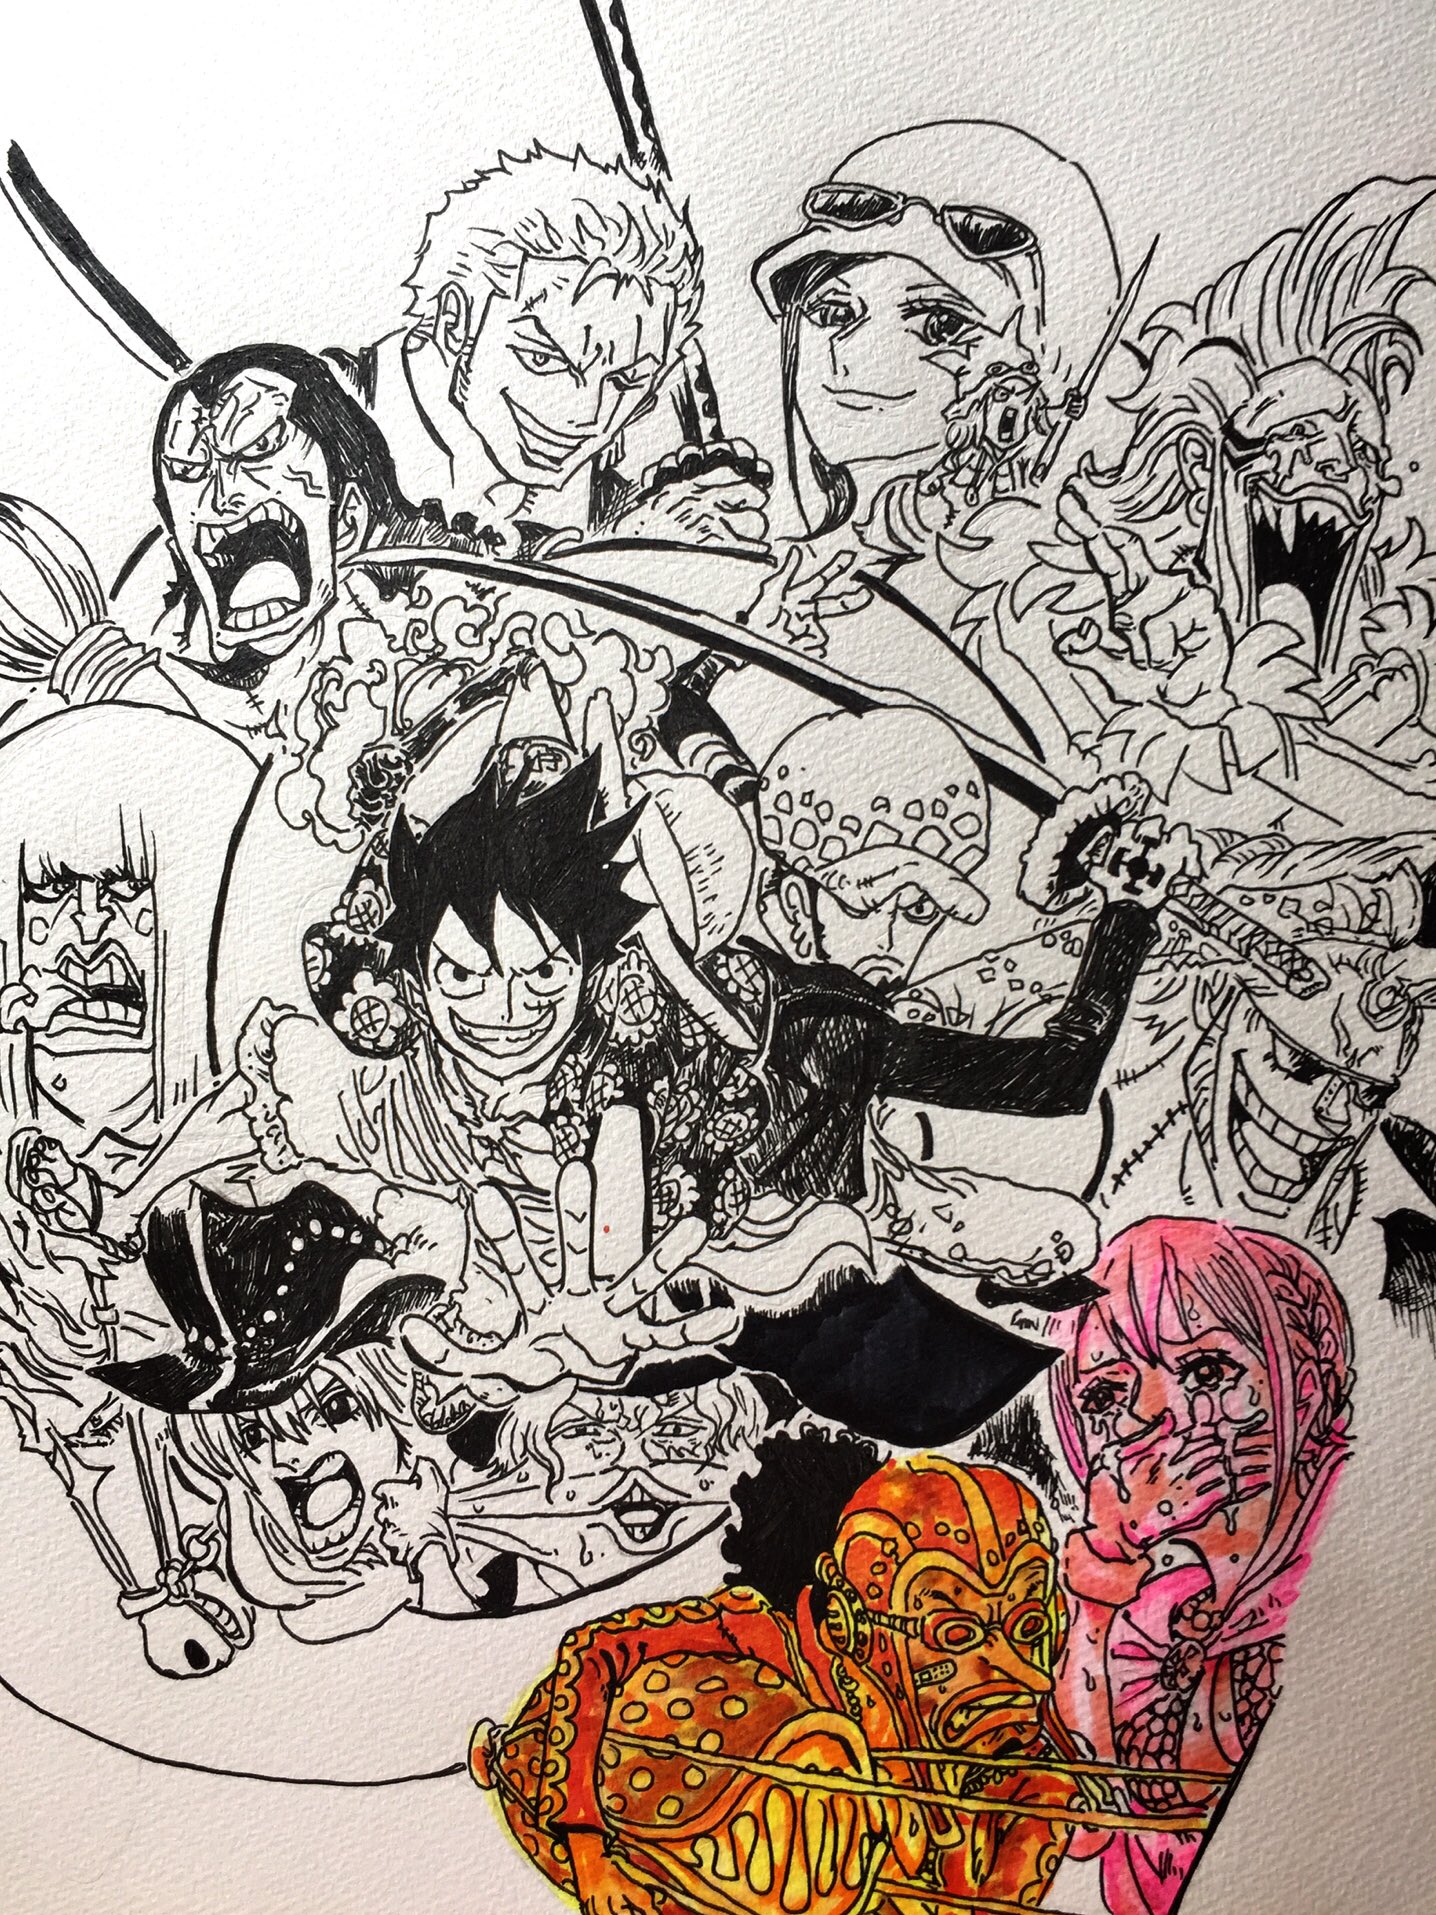 Miruton One Piece 76巻表紙 Onepiece Paint ワンピース 원피스 尾田栄一郎 漫画 ルフィ Luffy T Co R9ddz0i0mh Twitter